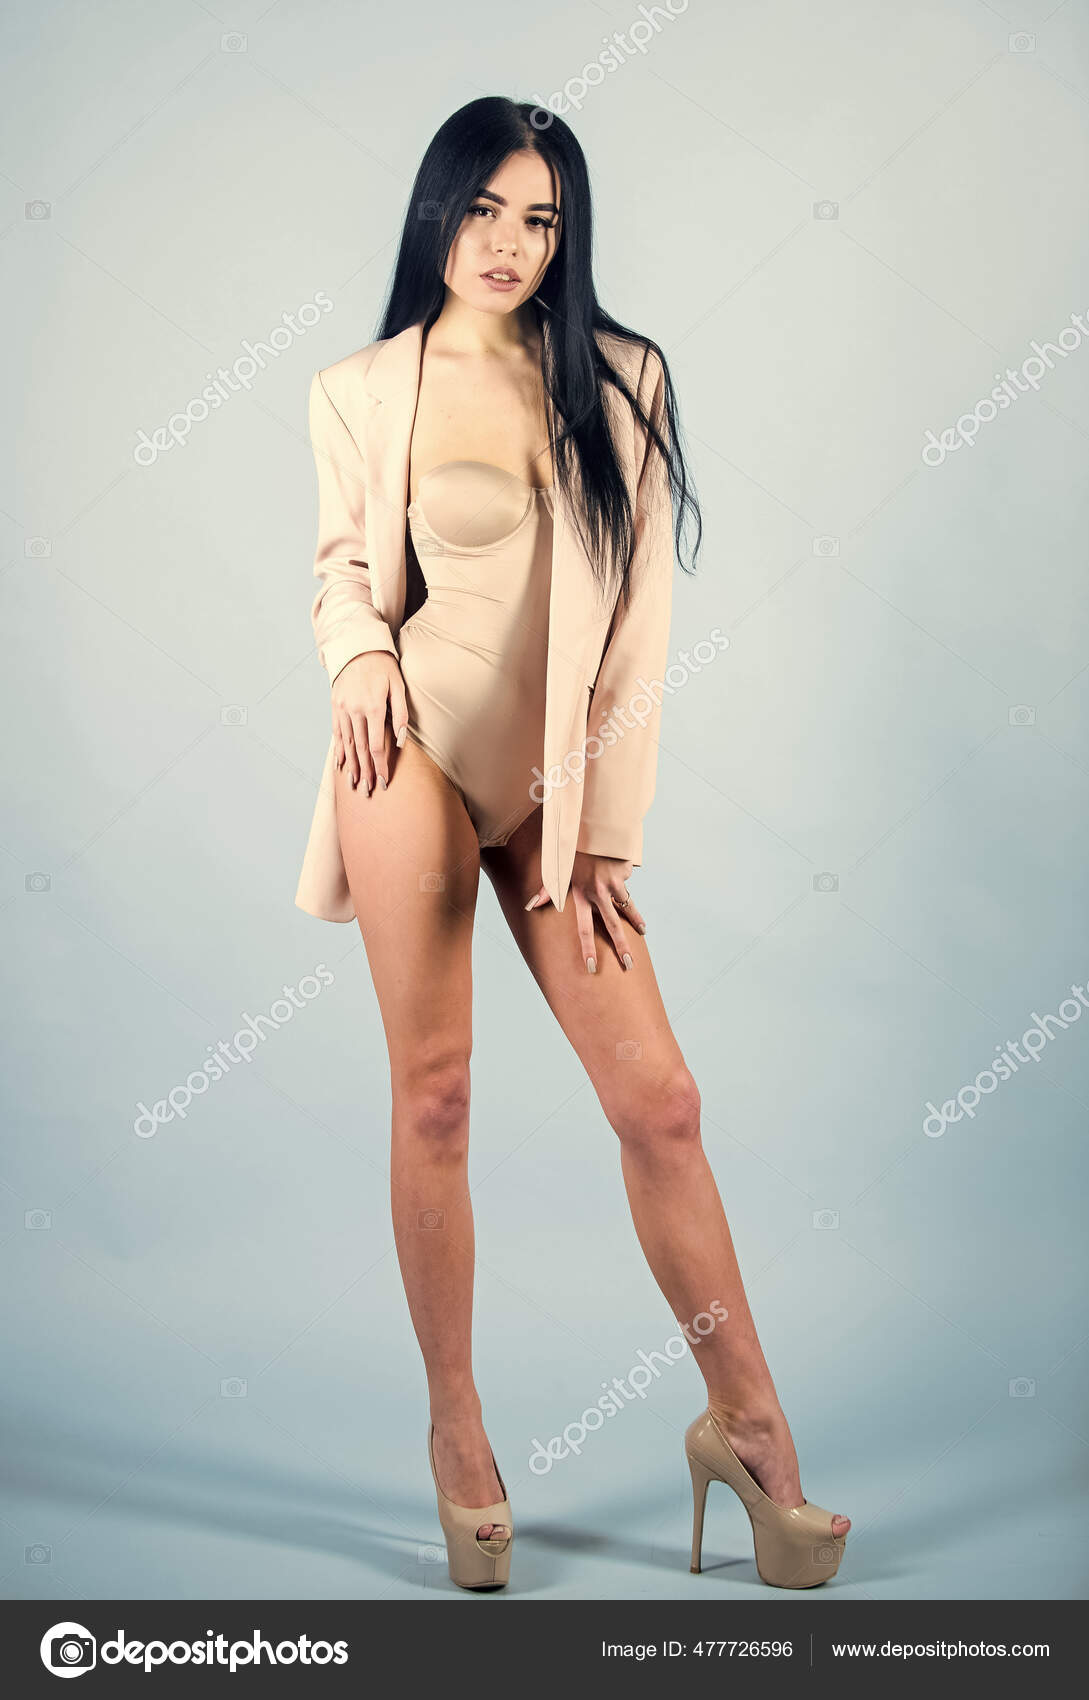 Woman sexy long legs playful mood